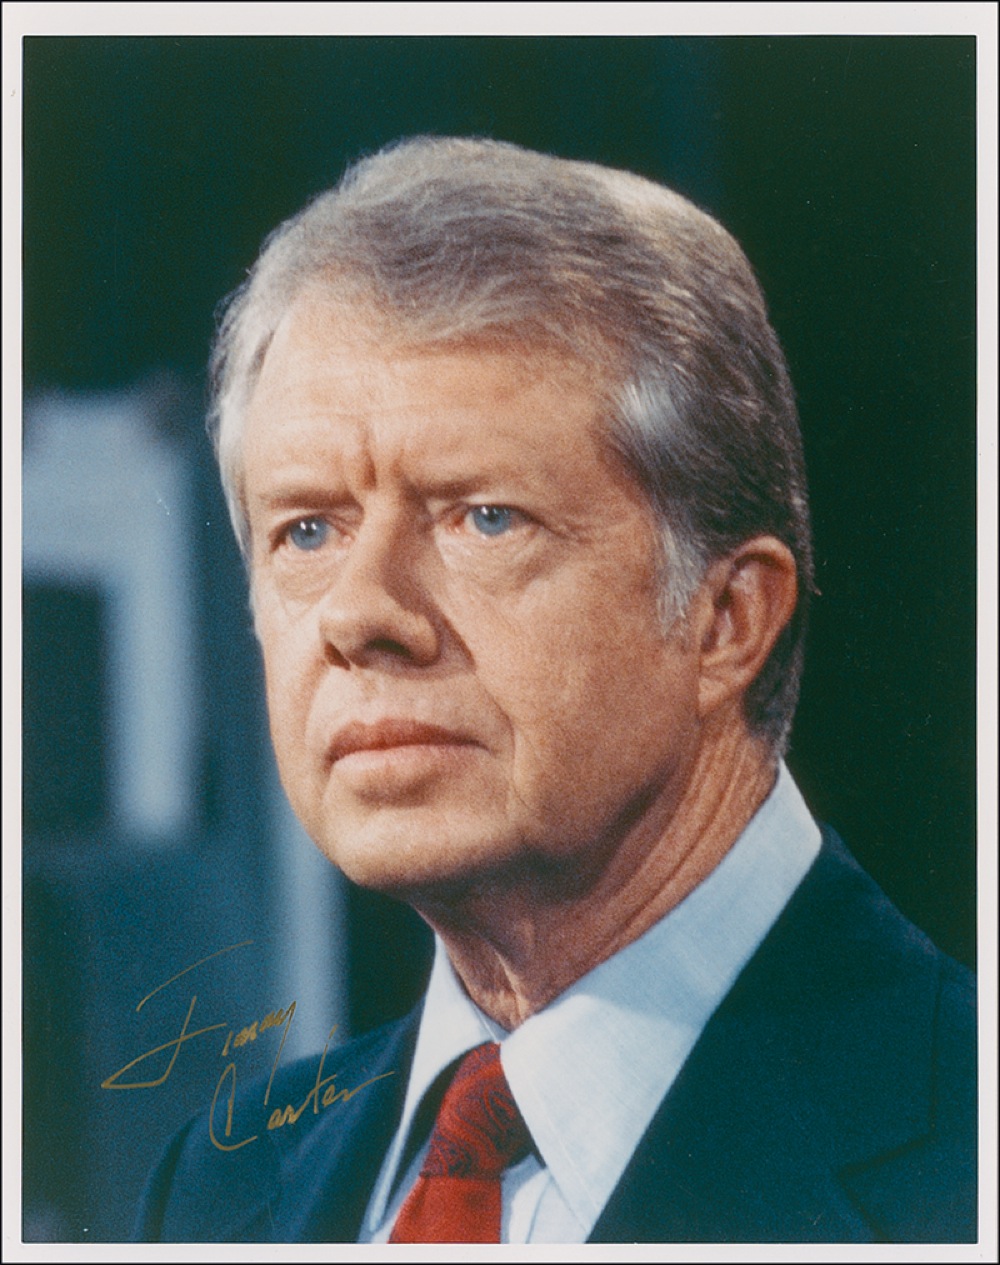 Lot #24 Jimmy Carter - Image 1